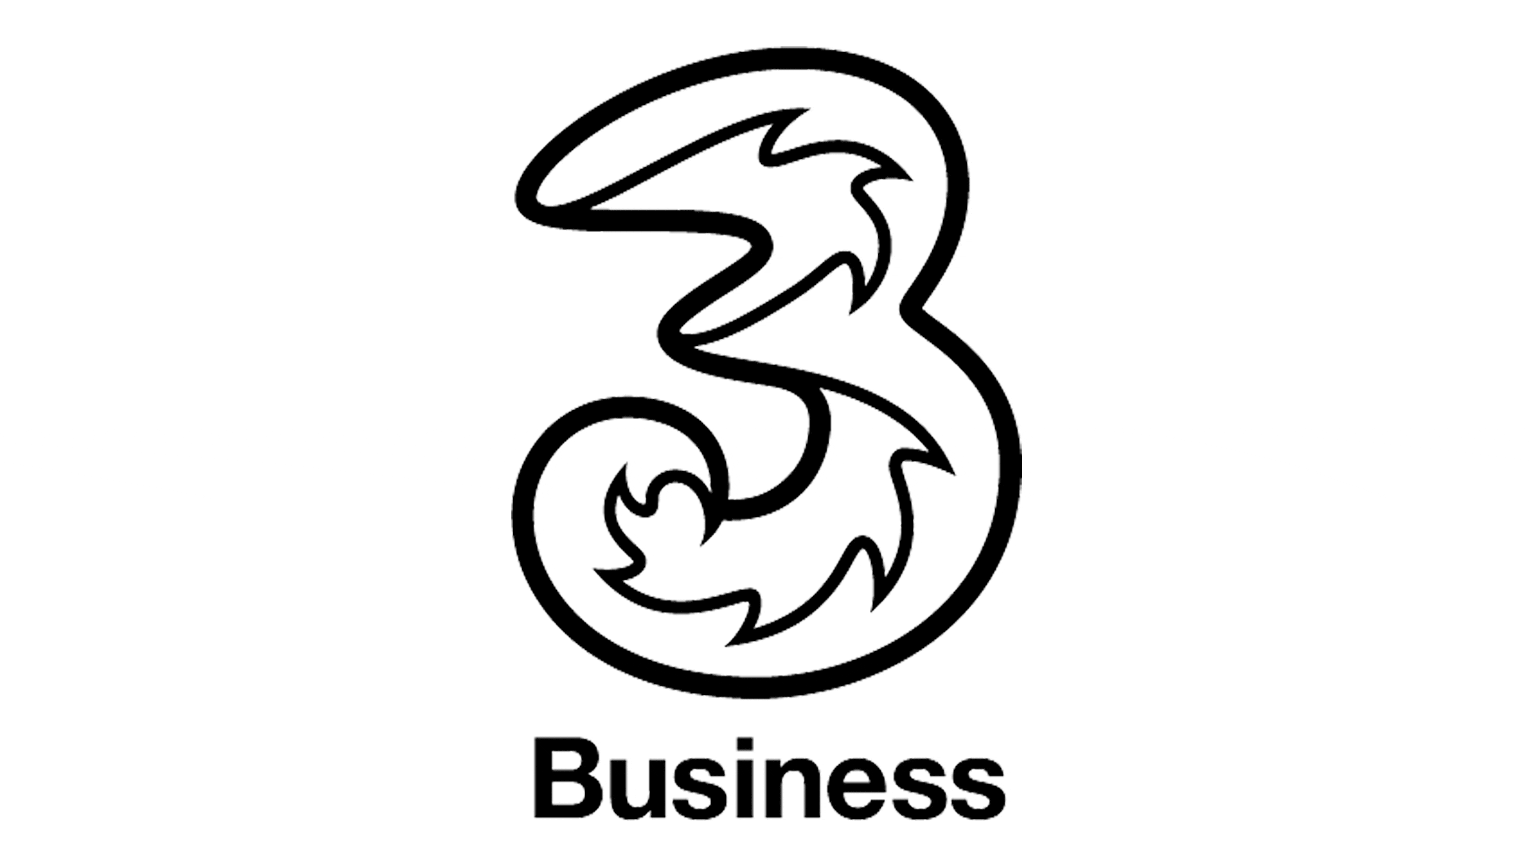 drei-business-logo